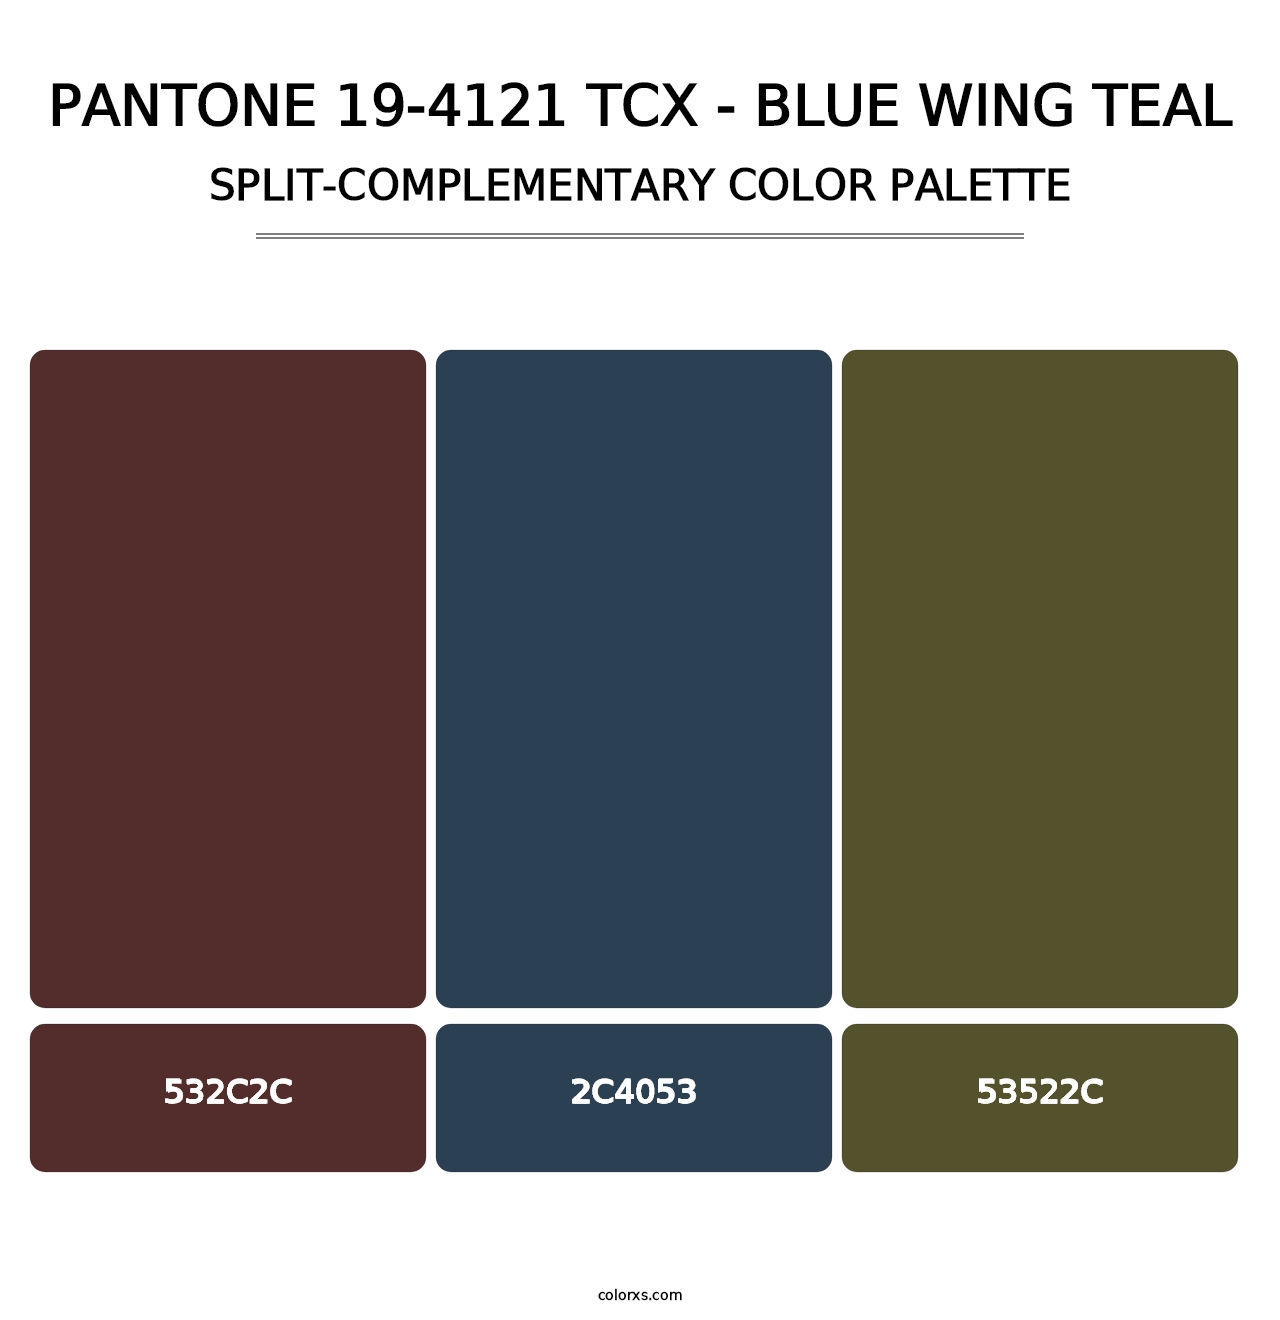 PANTONE 19-4121 TCX - Blue Wing Teal - Split-Complementary Color Palette